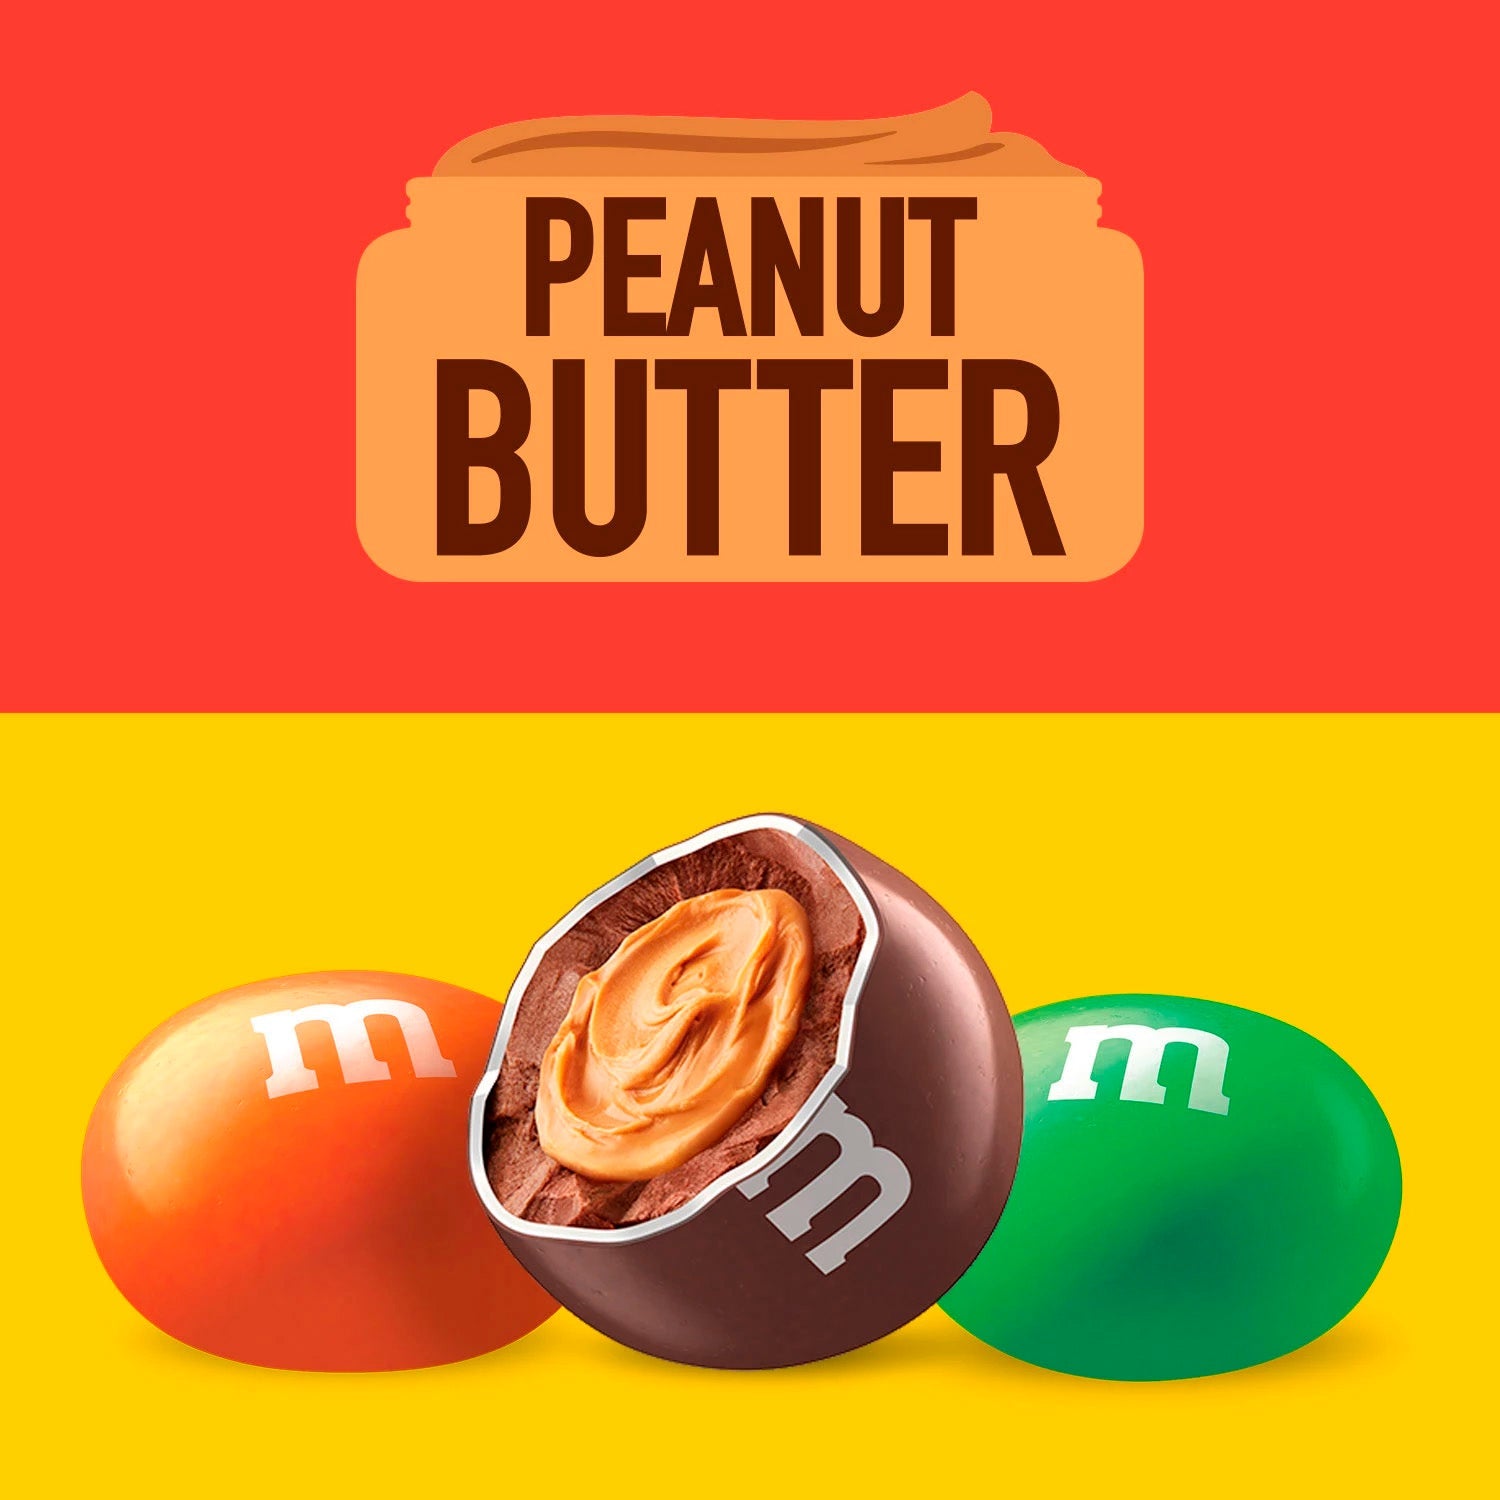 M&M's Peanut Butter Milk Chocolate Candy Jar - 55 Oz – Contarmarket